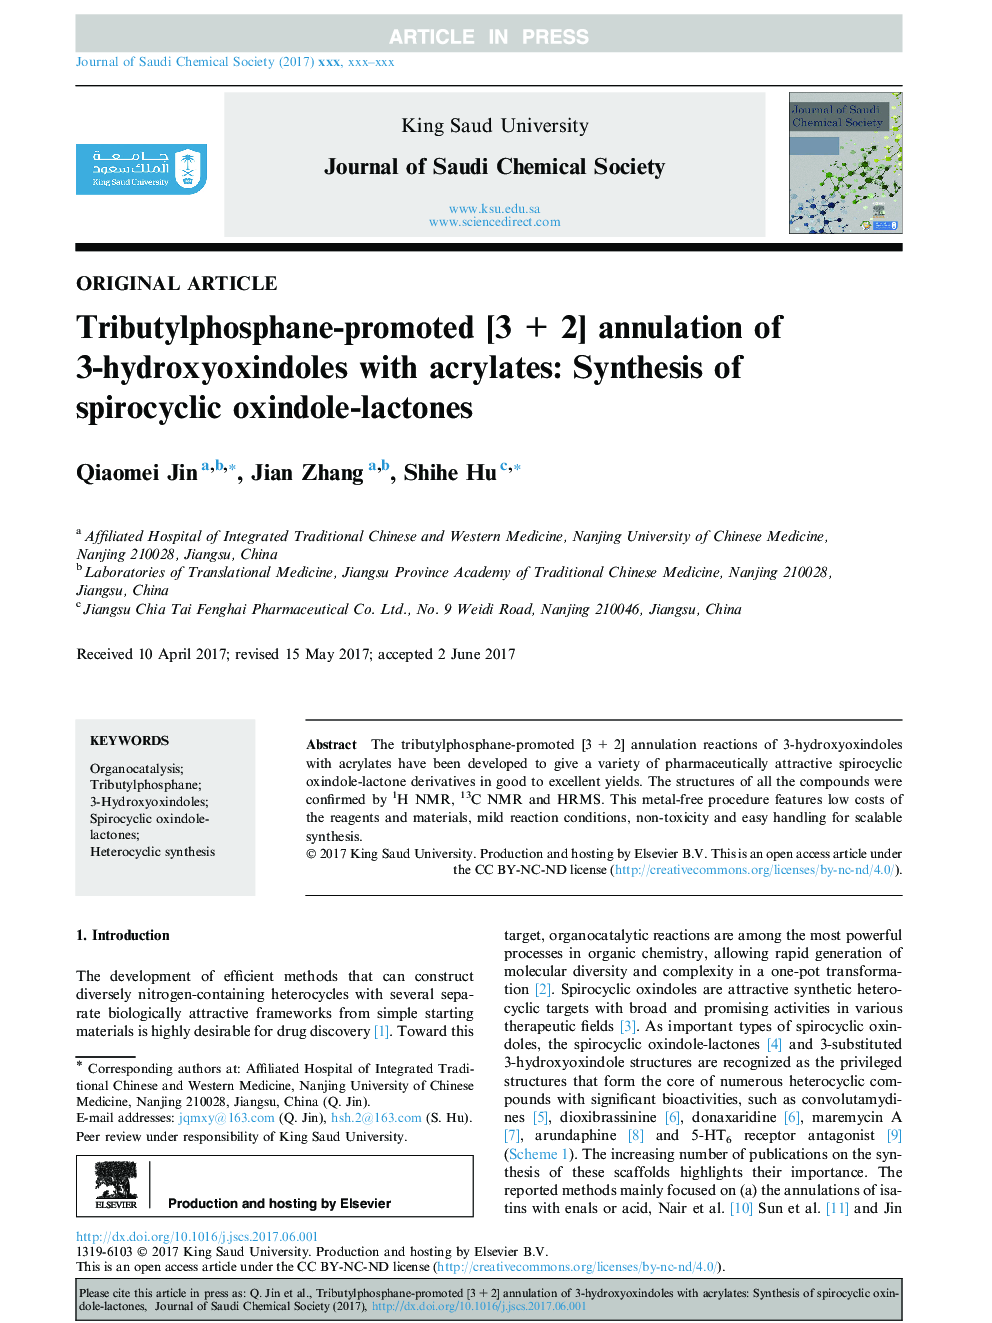 Tributylphosphane-promoted [3Â +Â 2] annulation of 3-hydroxyoxindoles with acrylates: Synthesis of spirocyclic oxindole-lactones